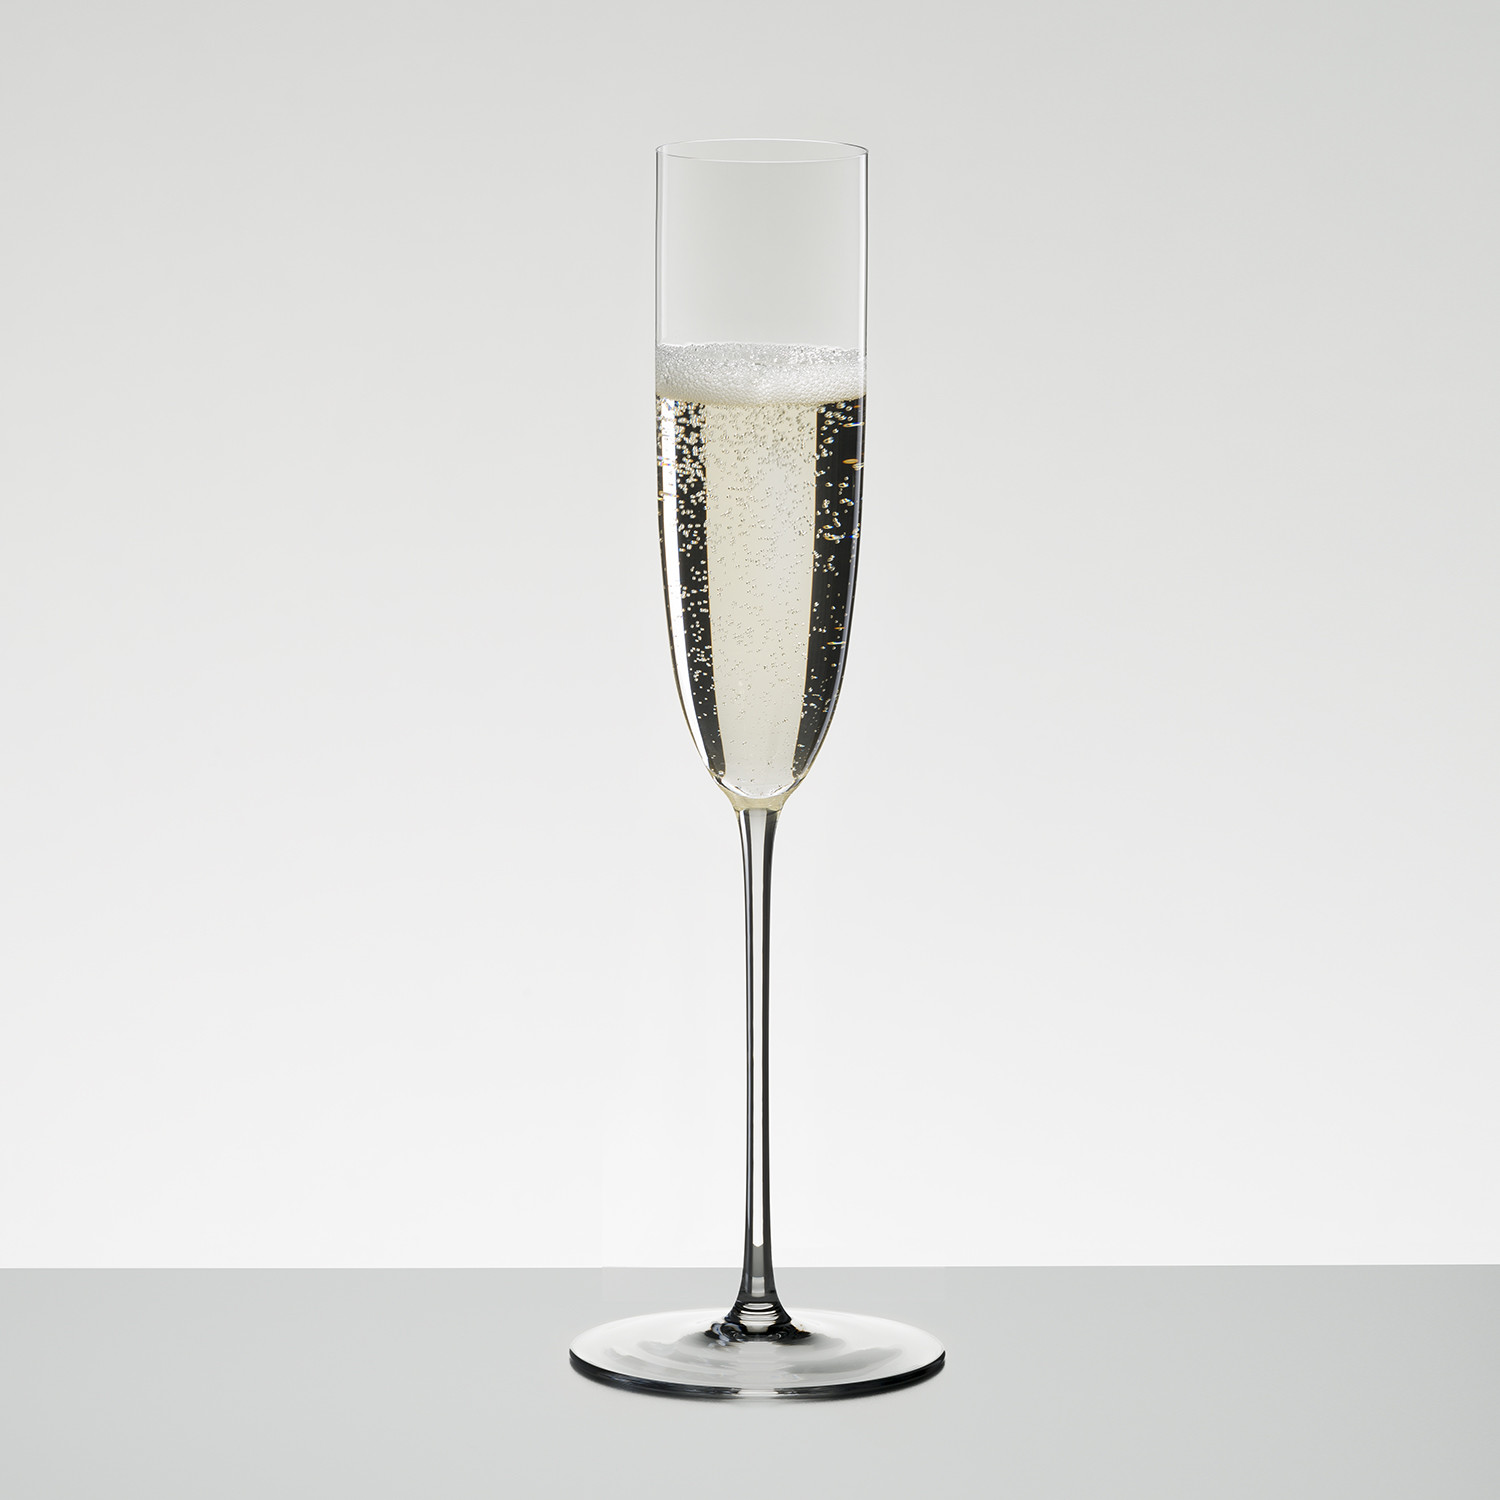 Флюте для шампанского. Riedel бокал для шампанского Superleggero Champagne Flute 4425/08 186 мл. Flute бокал Riedel. Бокал флюте Flute. Шампань флюте бокал.